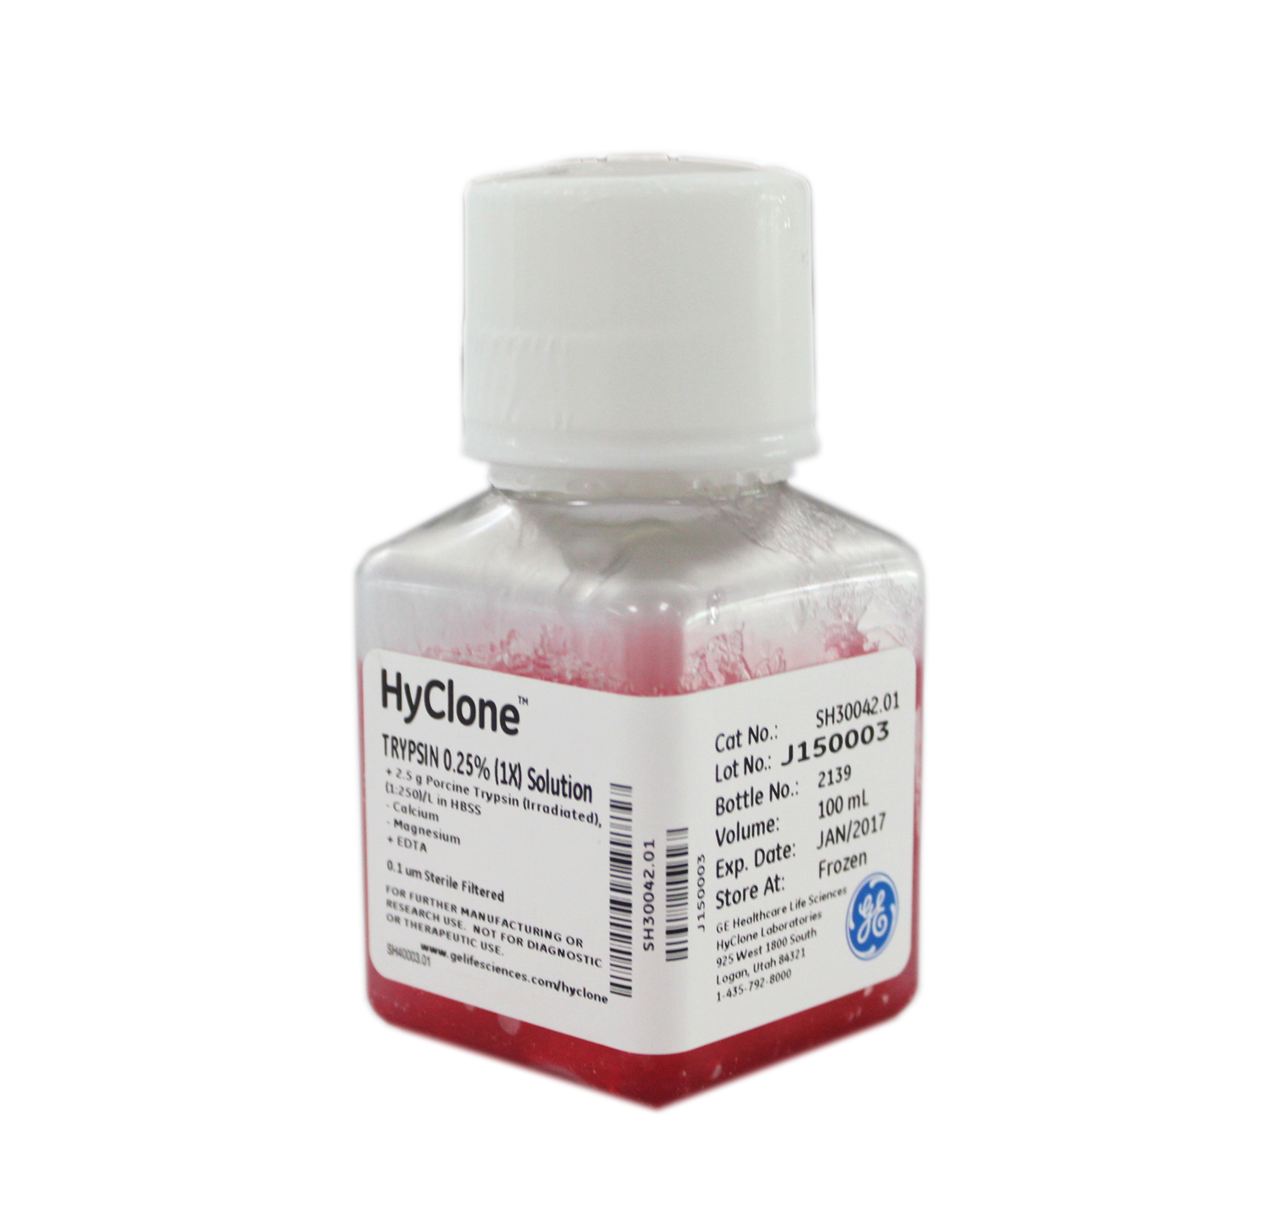 SH30042.01，HyClone，0.25%胰蛋白酶溶液